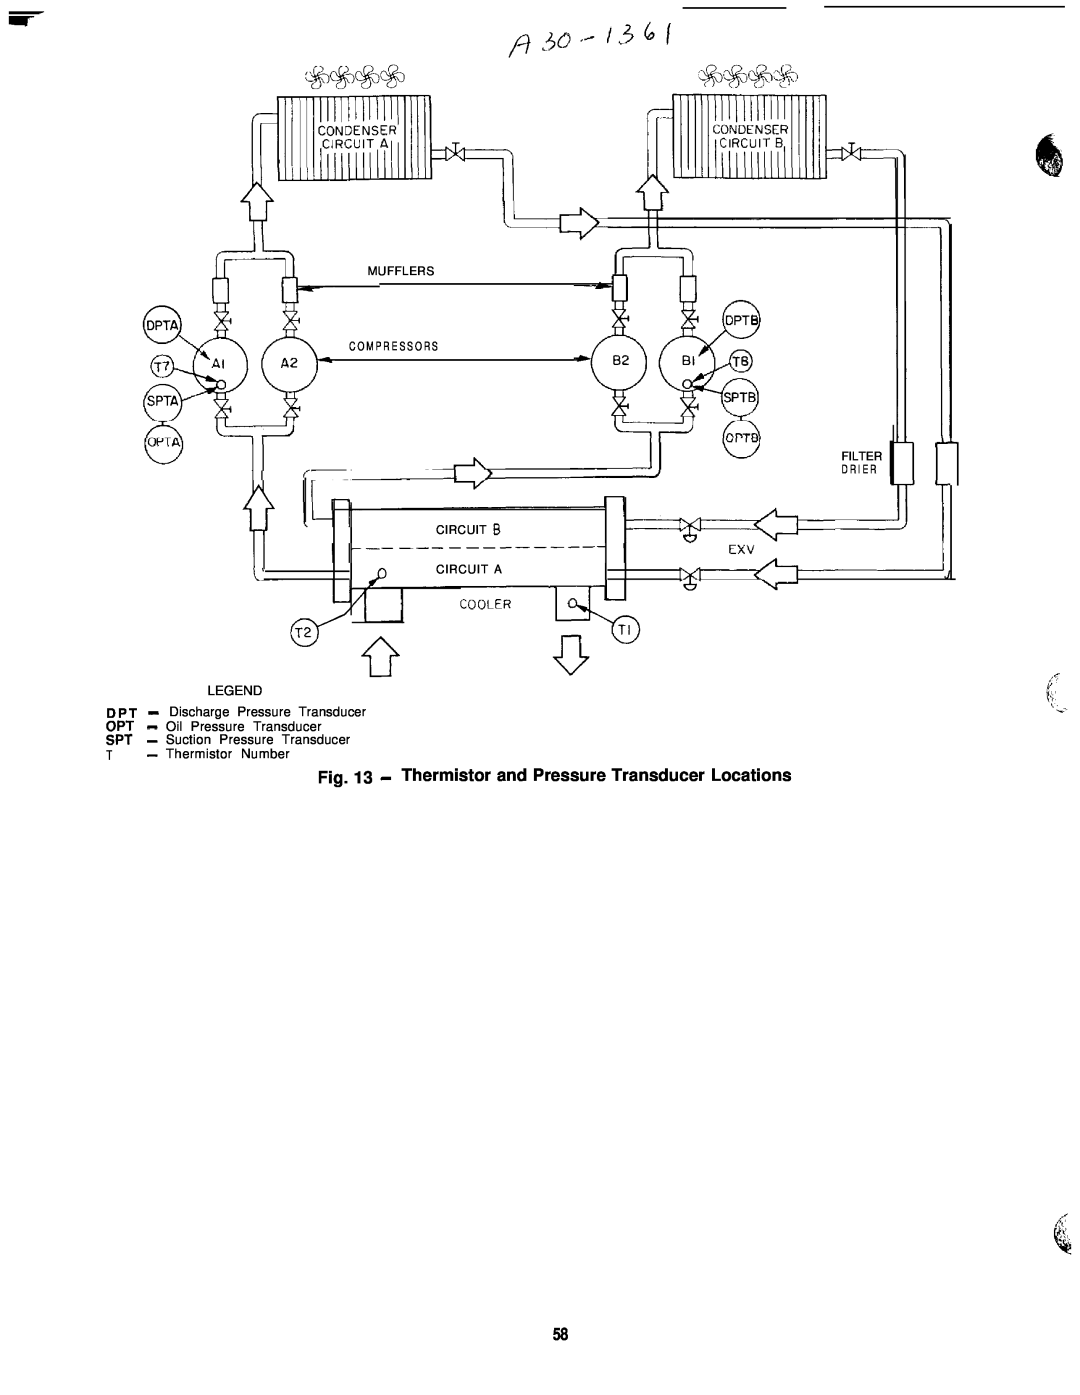 Carrier 040-420 LEGEND D P T - Discharge Pressure Transducer, Oil Pressure Transducer, ppTT - Suction Pressure Transducer 